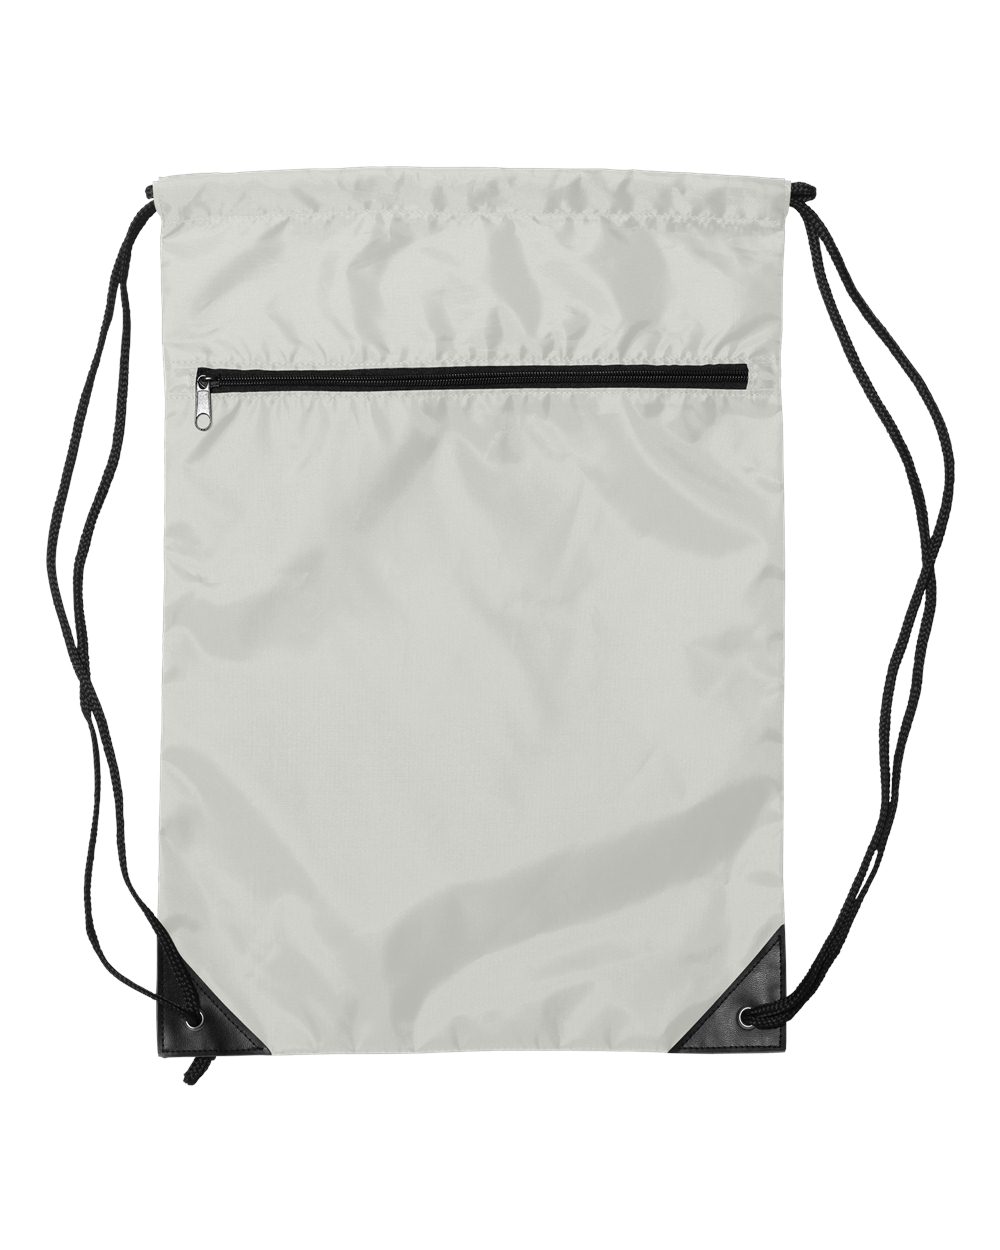 Liberty Bags 8888 - Denier Nylon Zippered Drawstring Backpack $3.35 - Bags